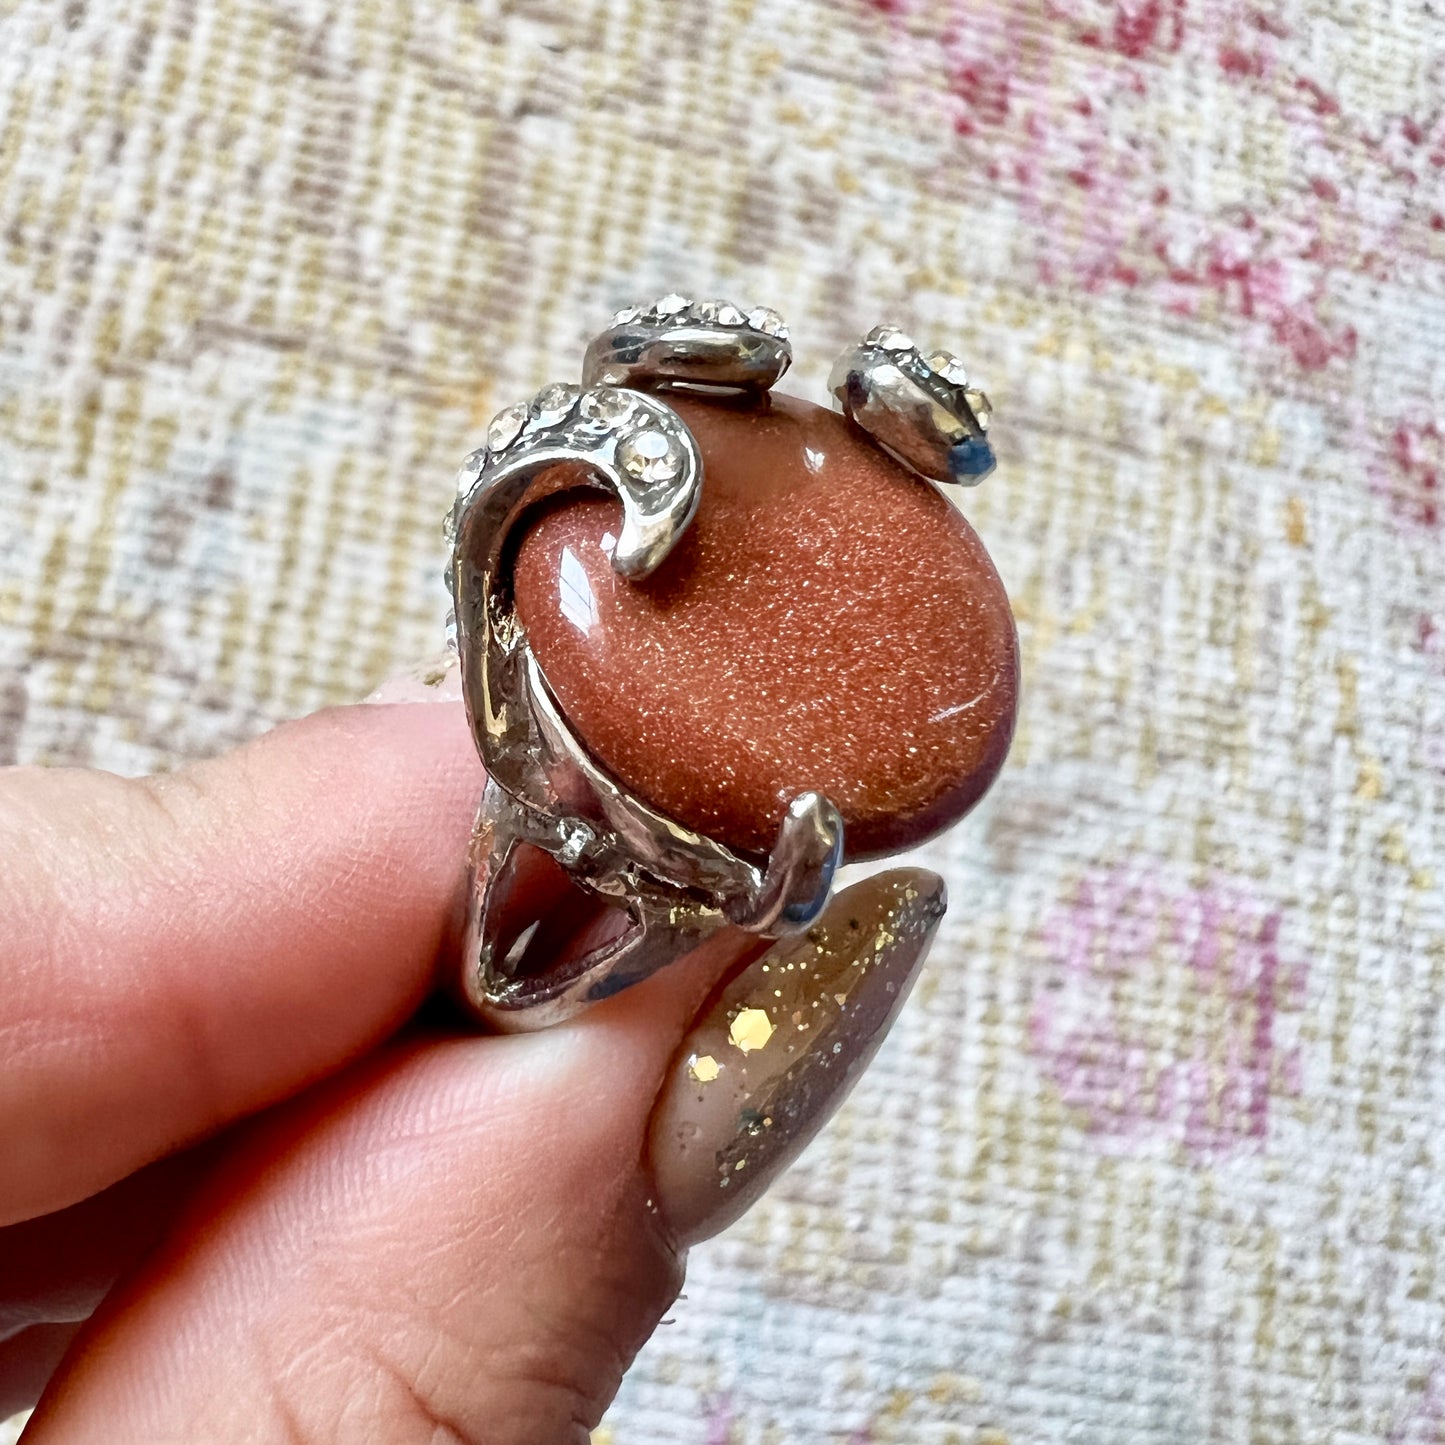 [AS-IS] Vintage Style Sandstone & Rhinestone Ring | size 5.75